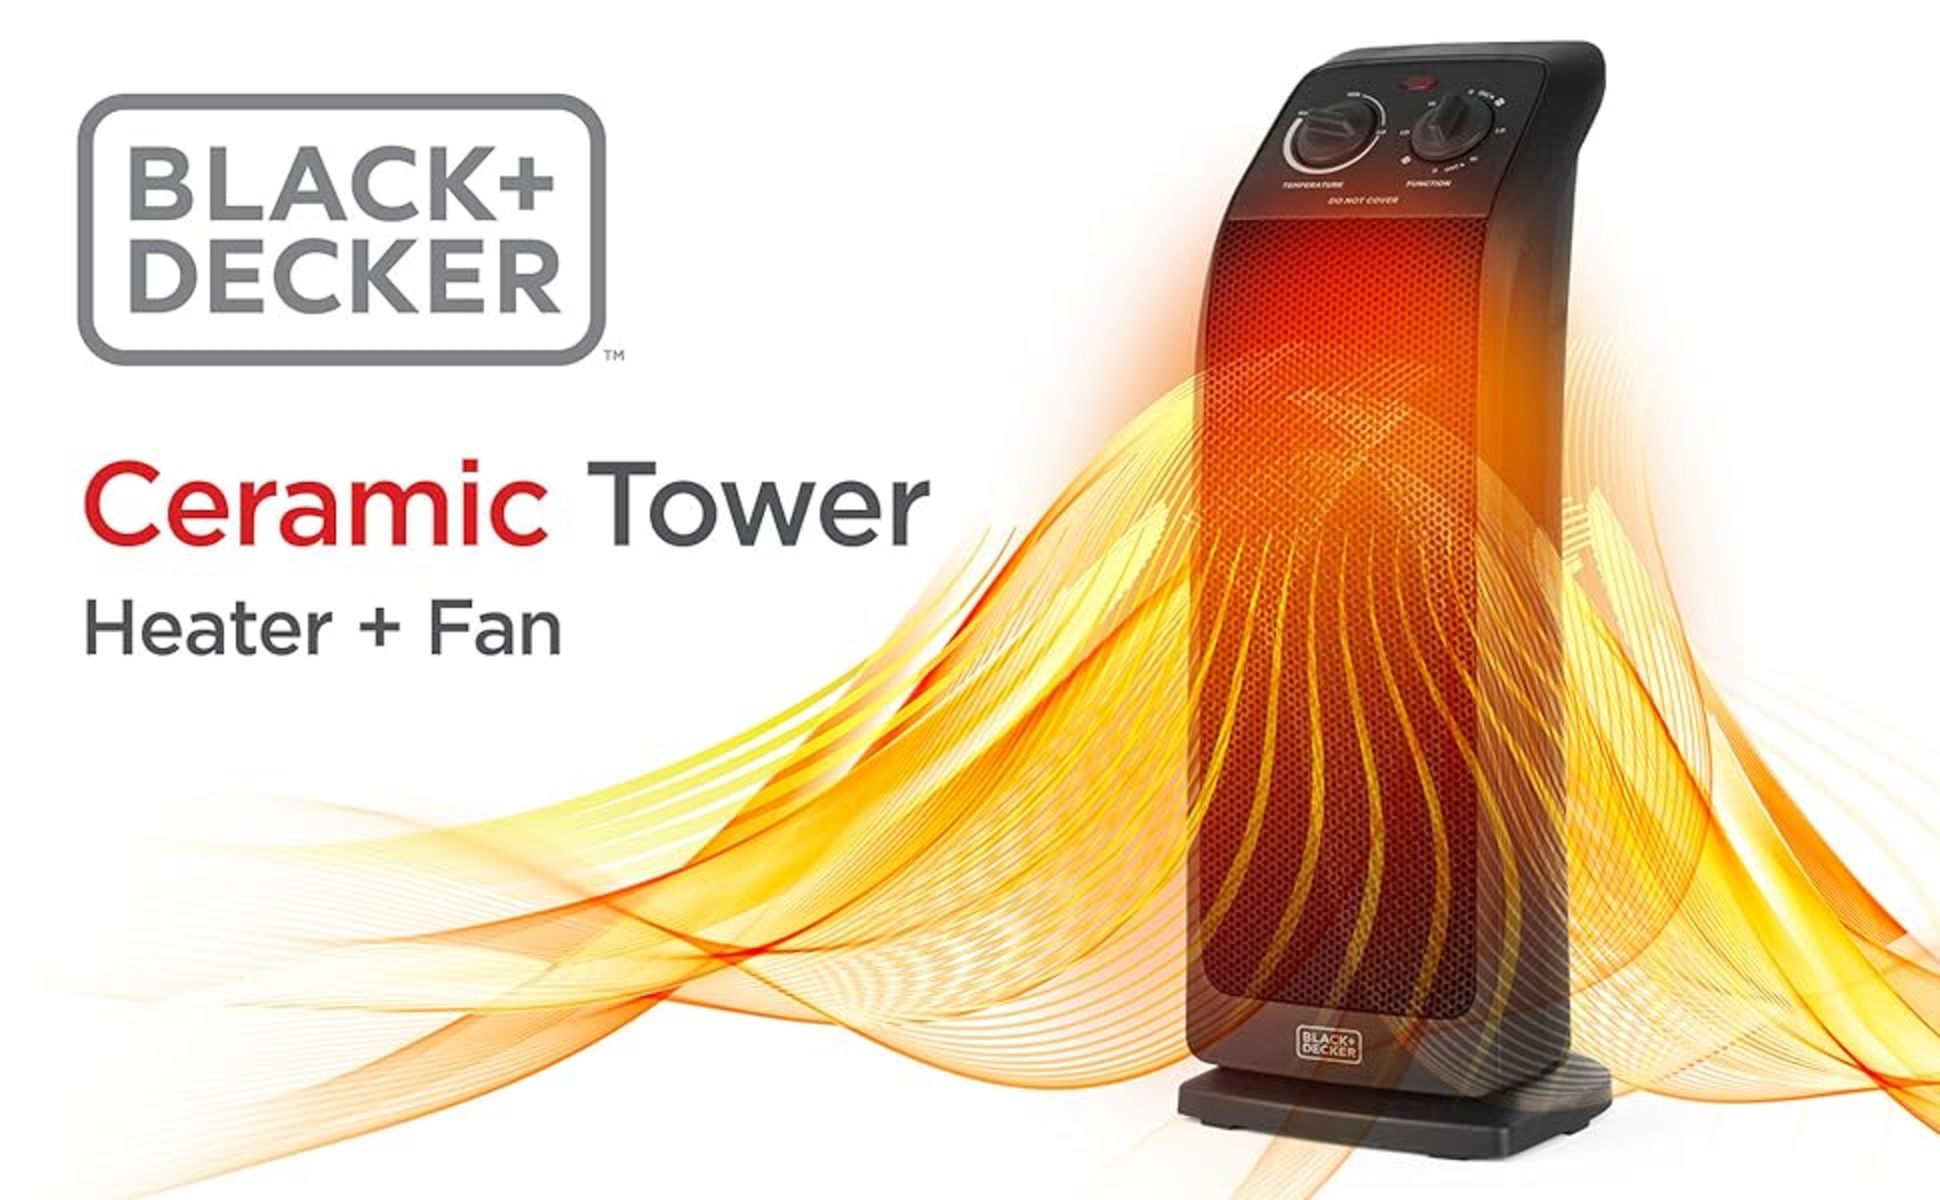 BLACK+DECKER Ceramic Tower Heater